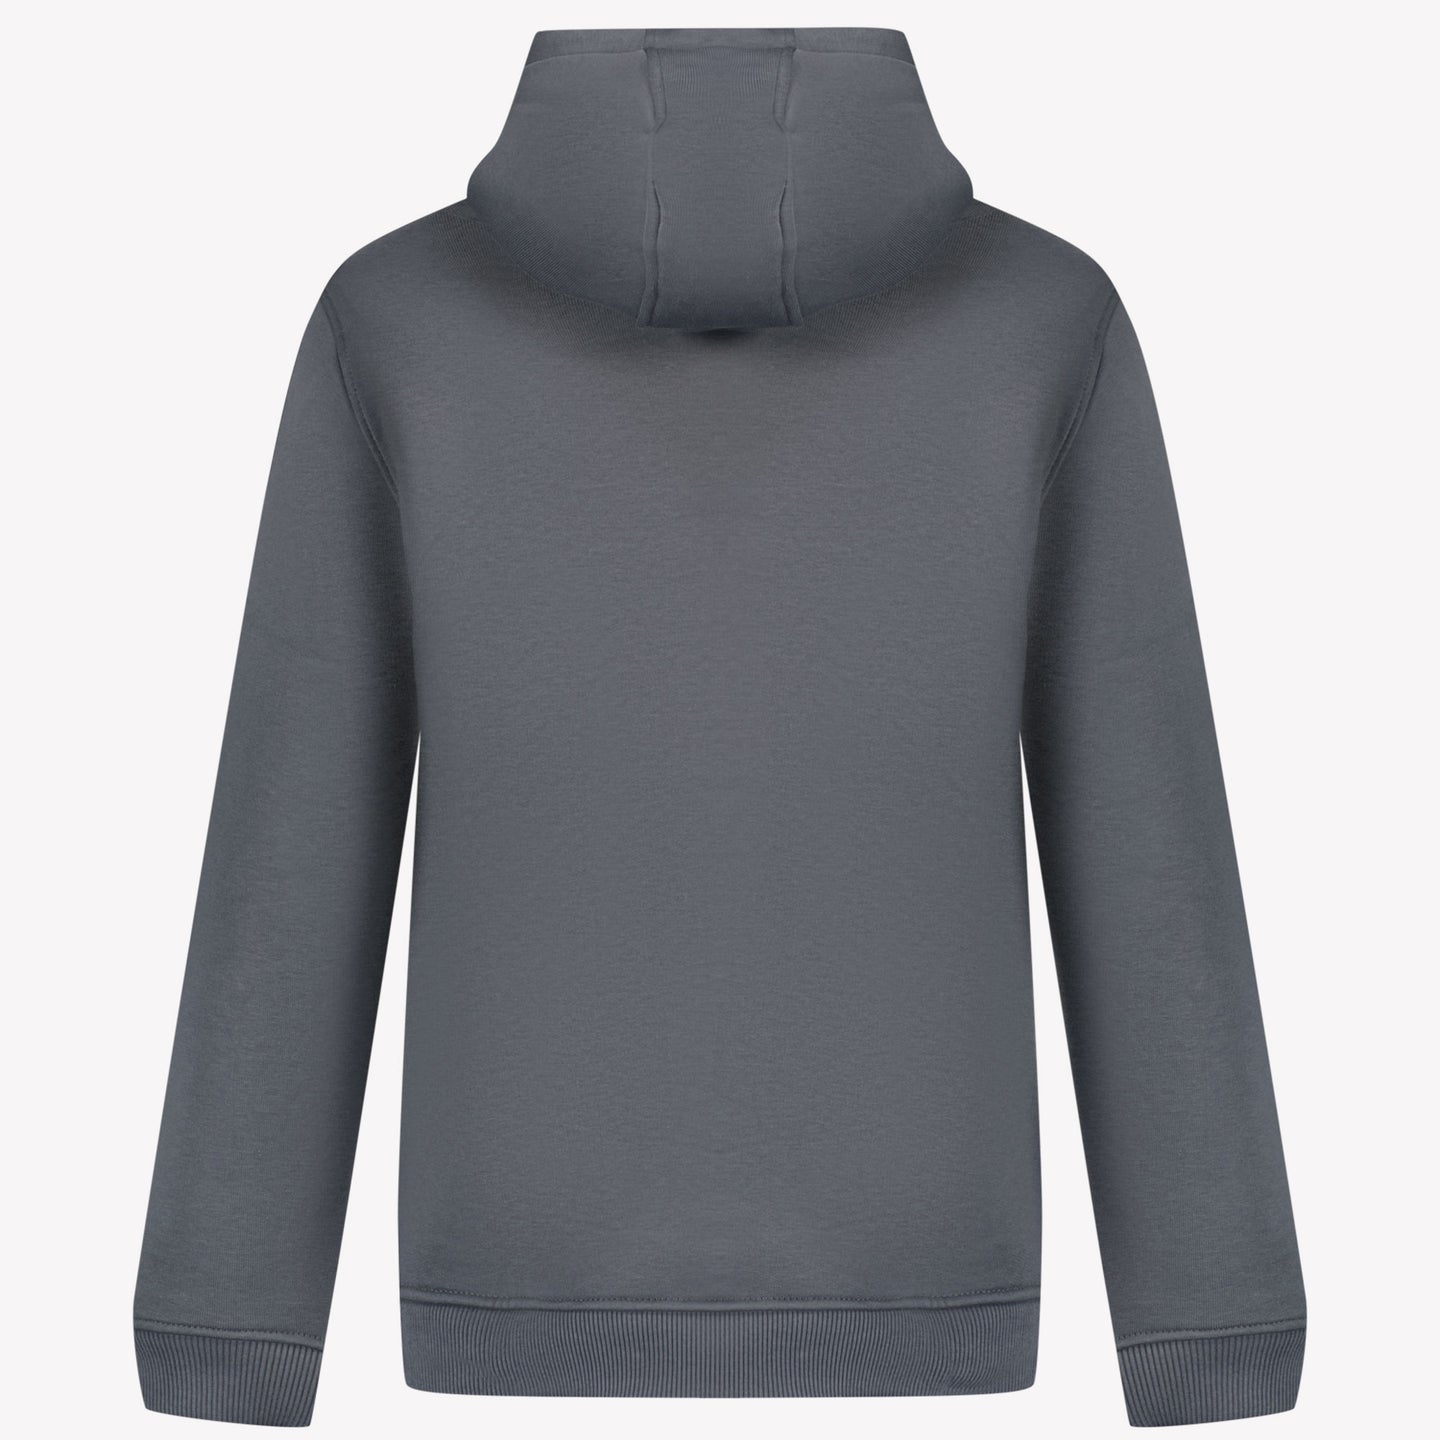 Malelions unisex suéter gris oscuro